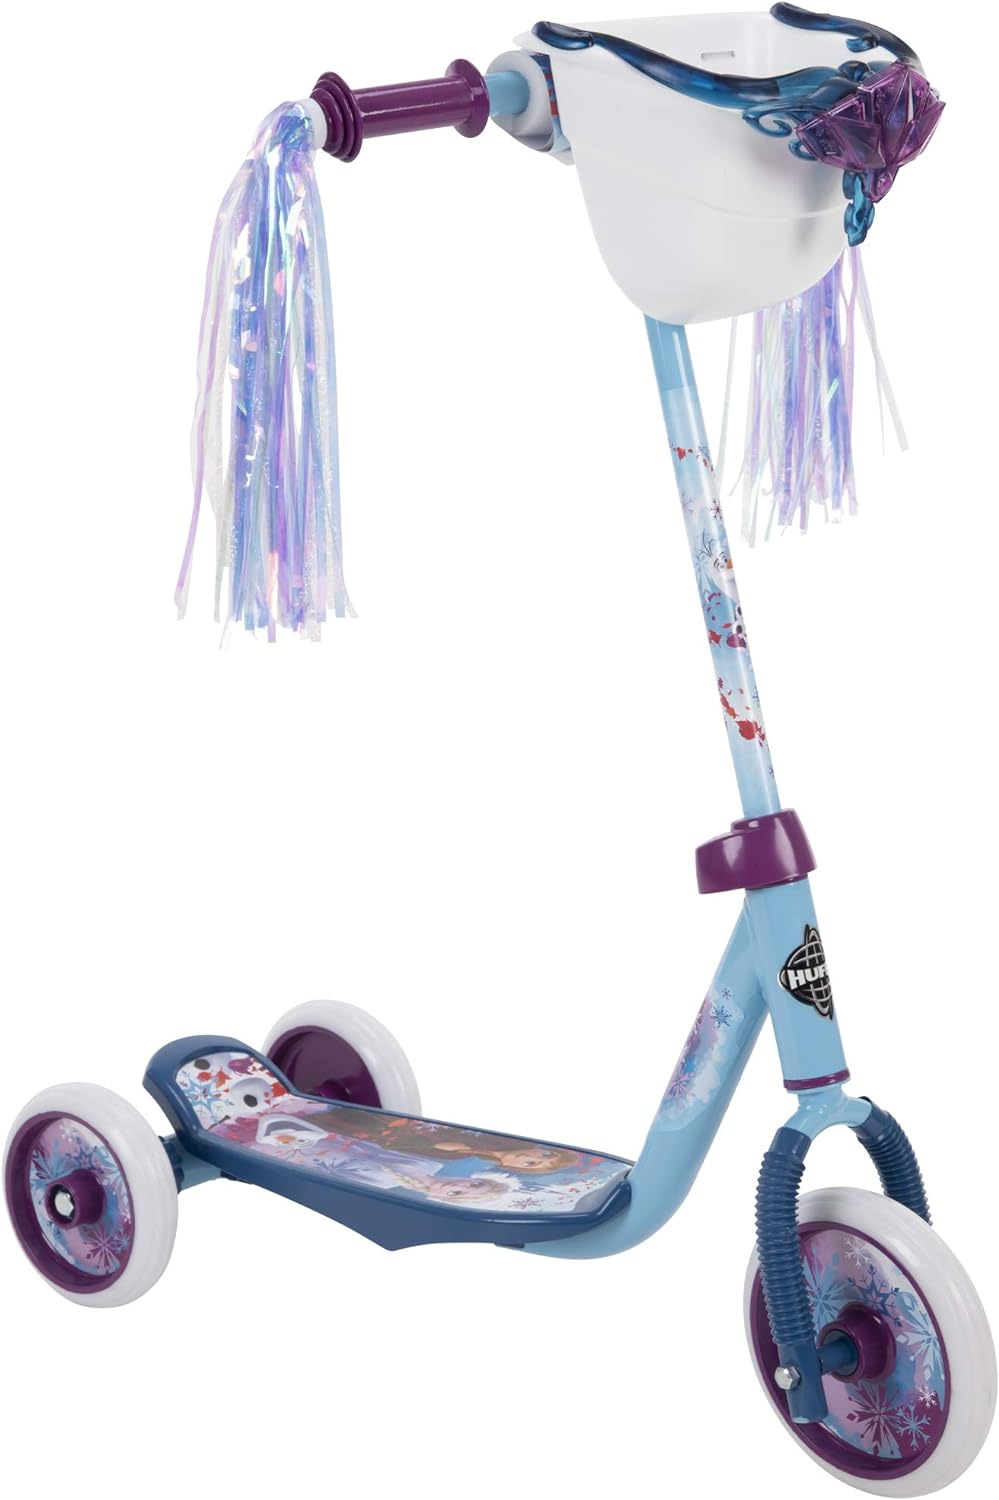 Huffy Disney Little Kids’ Preschool Scooter review